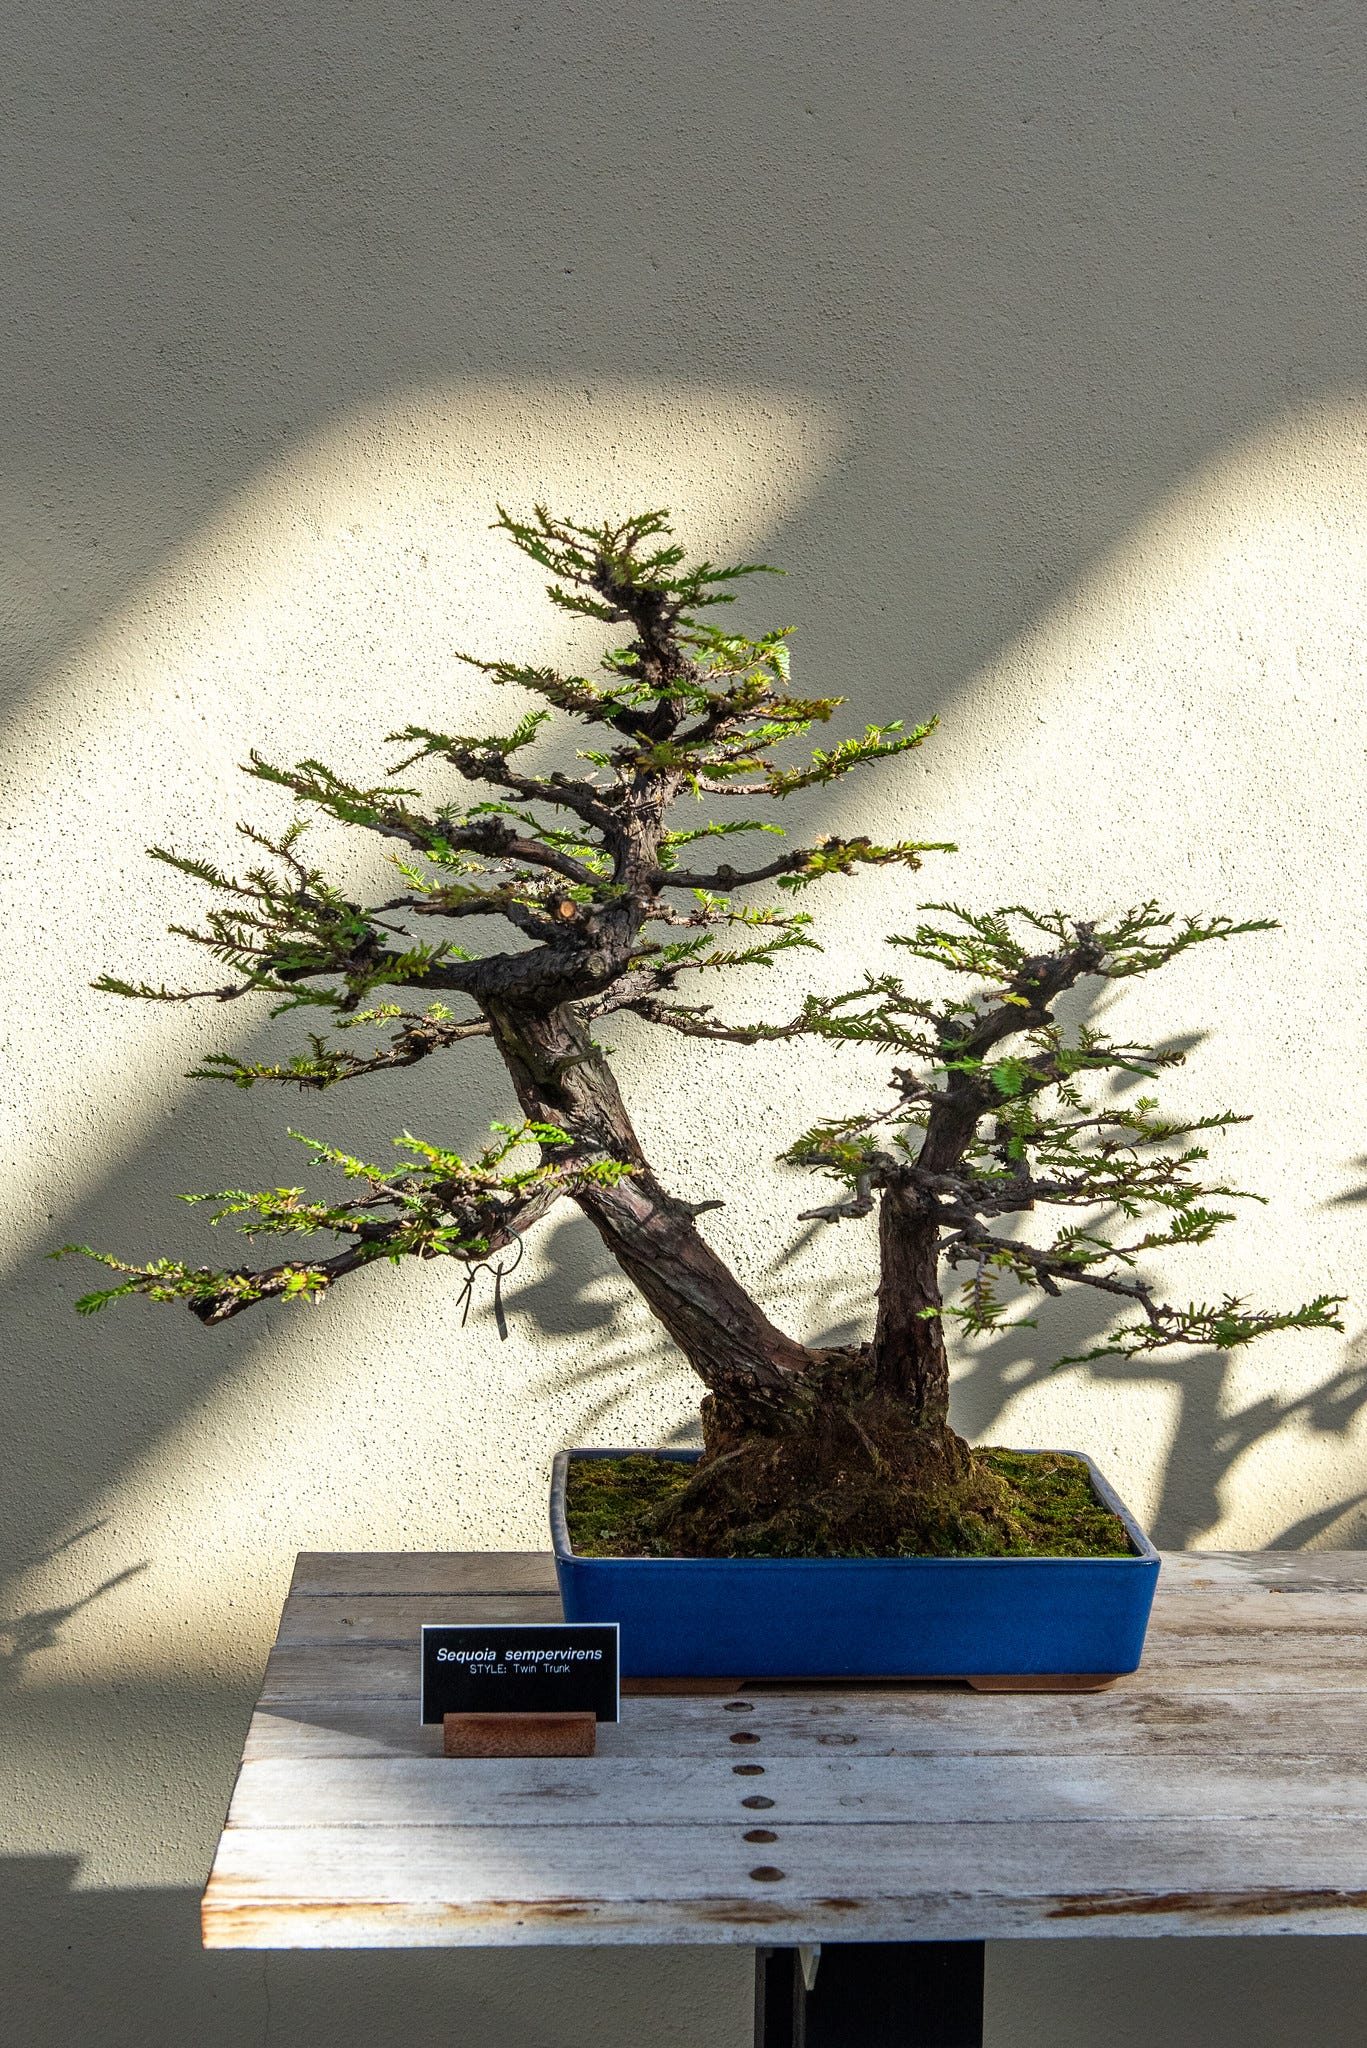 ID: A twin trunk sequoia bonsai